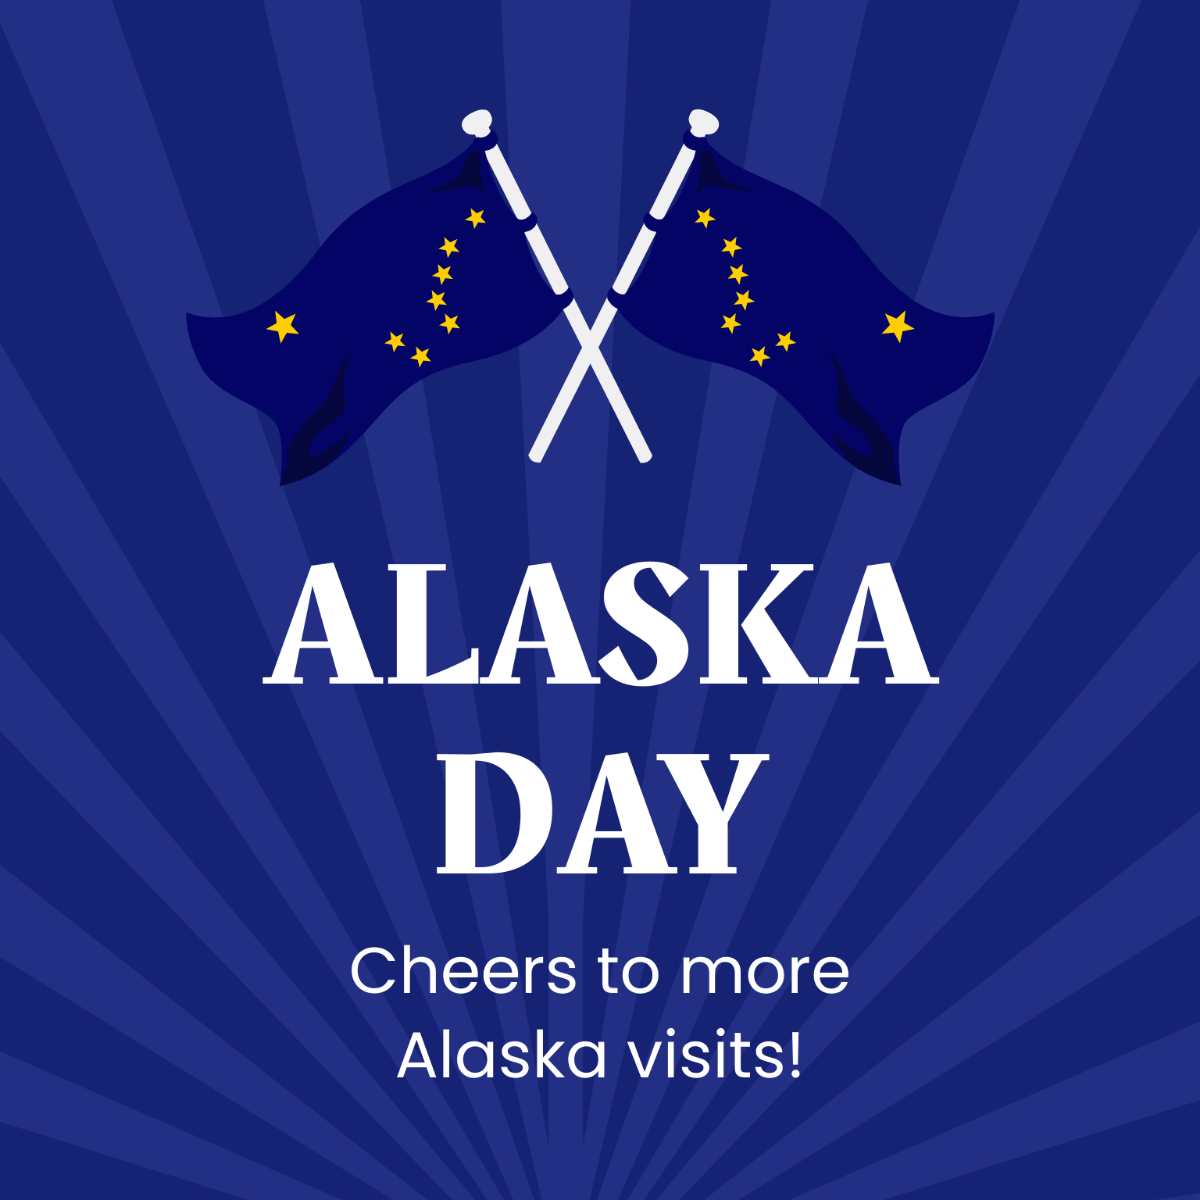 Free Alaska Day Poster Vector Template